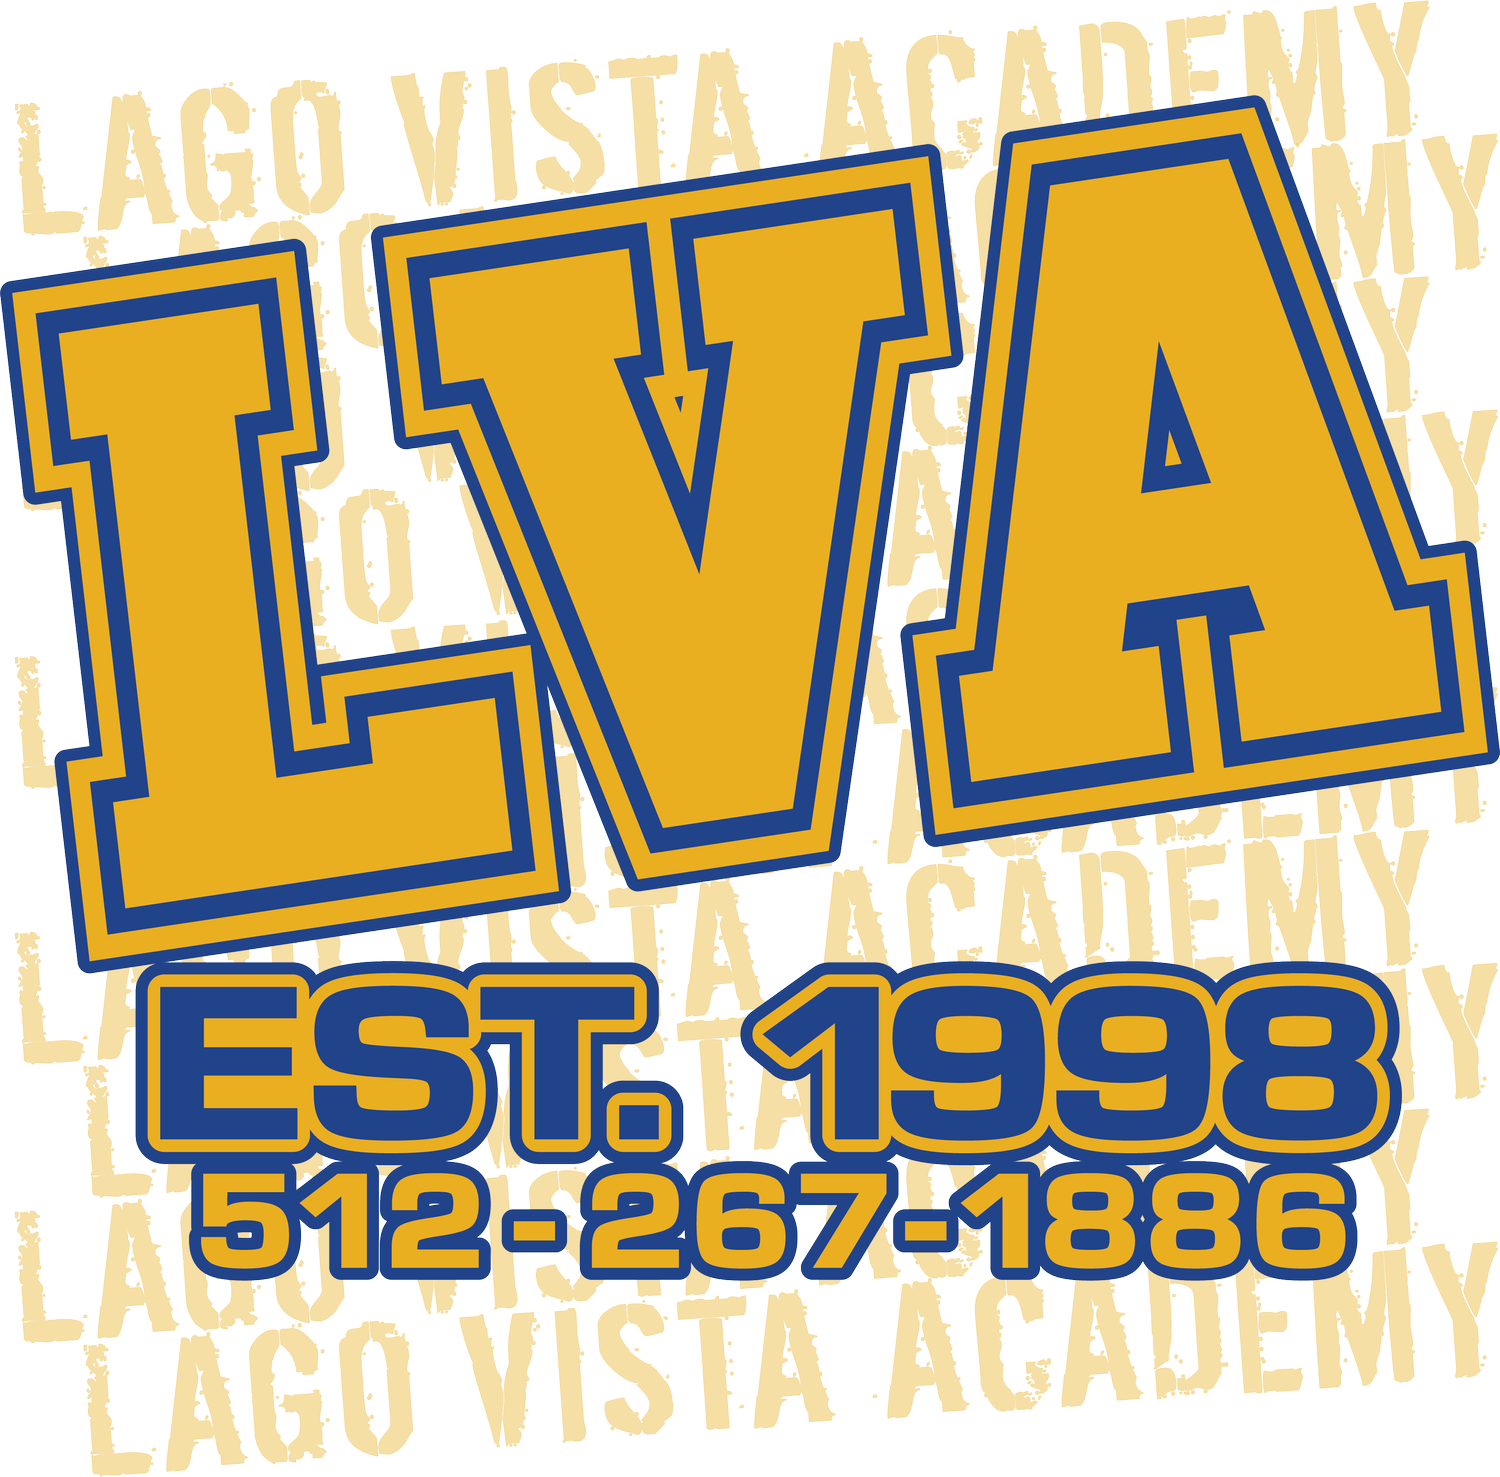 Lago Vista Academy